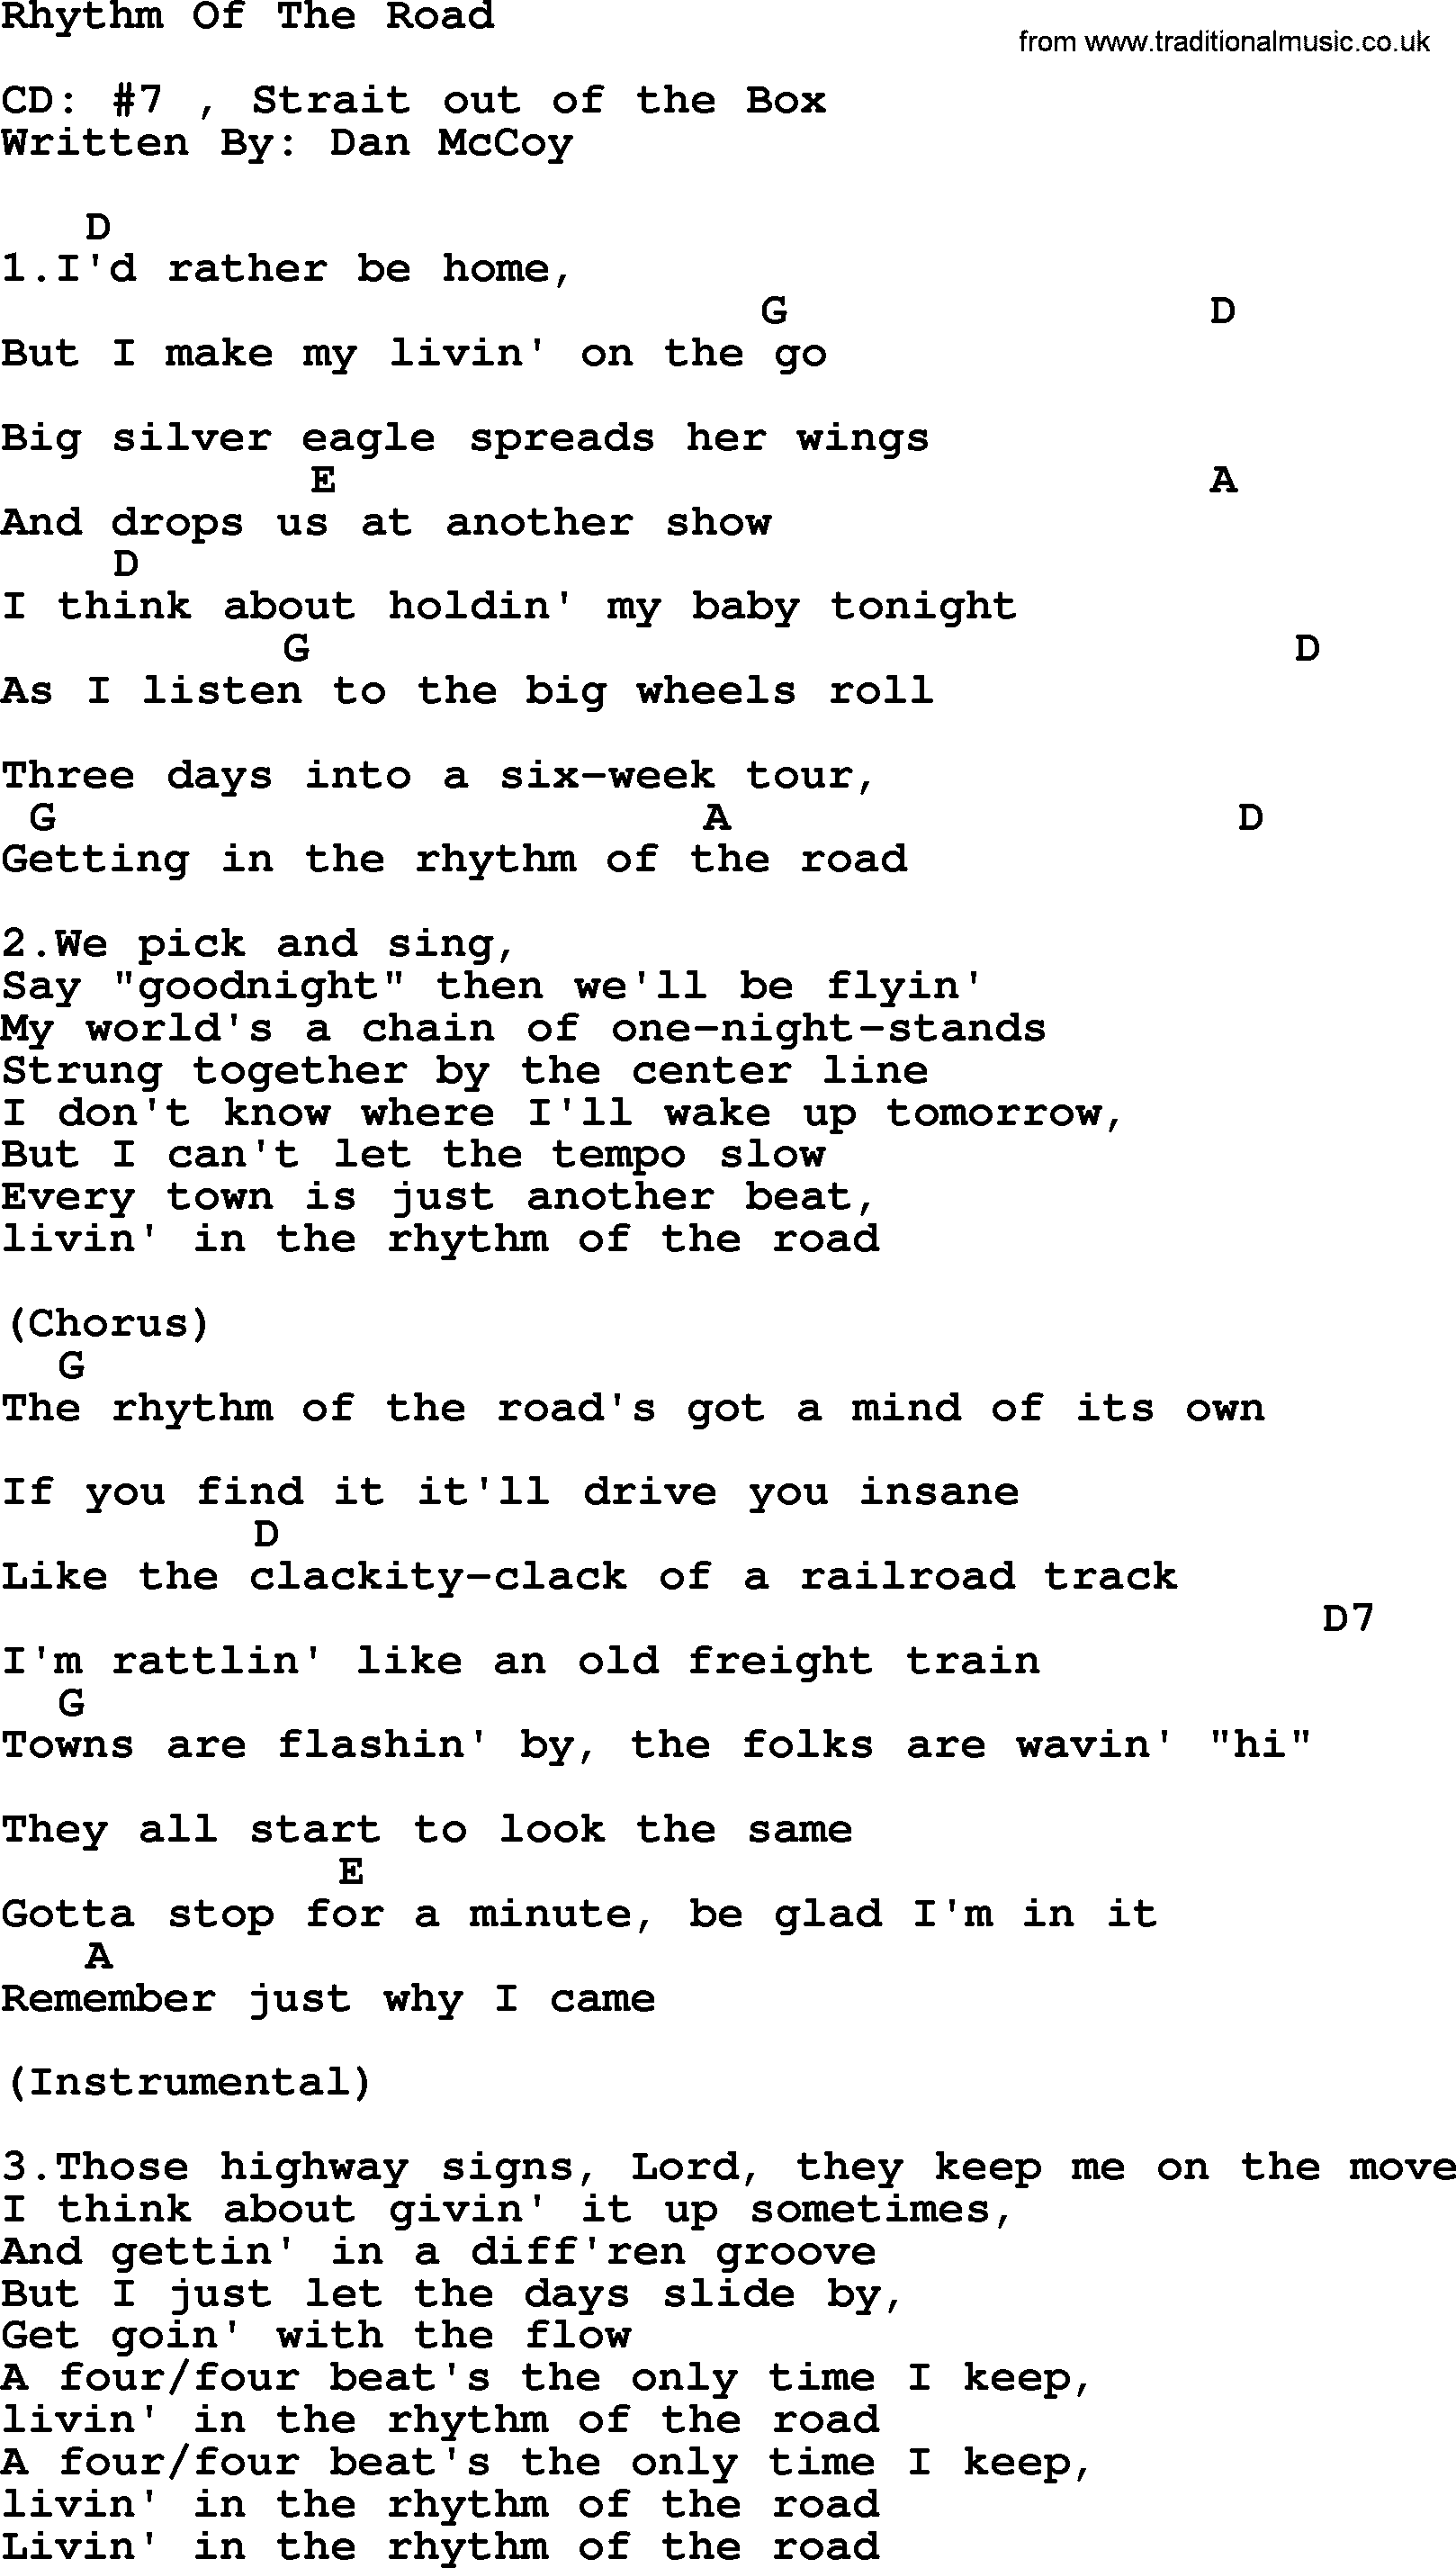 George Strait song: Rhythm Of The Road, lyrics and chords